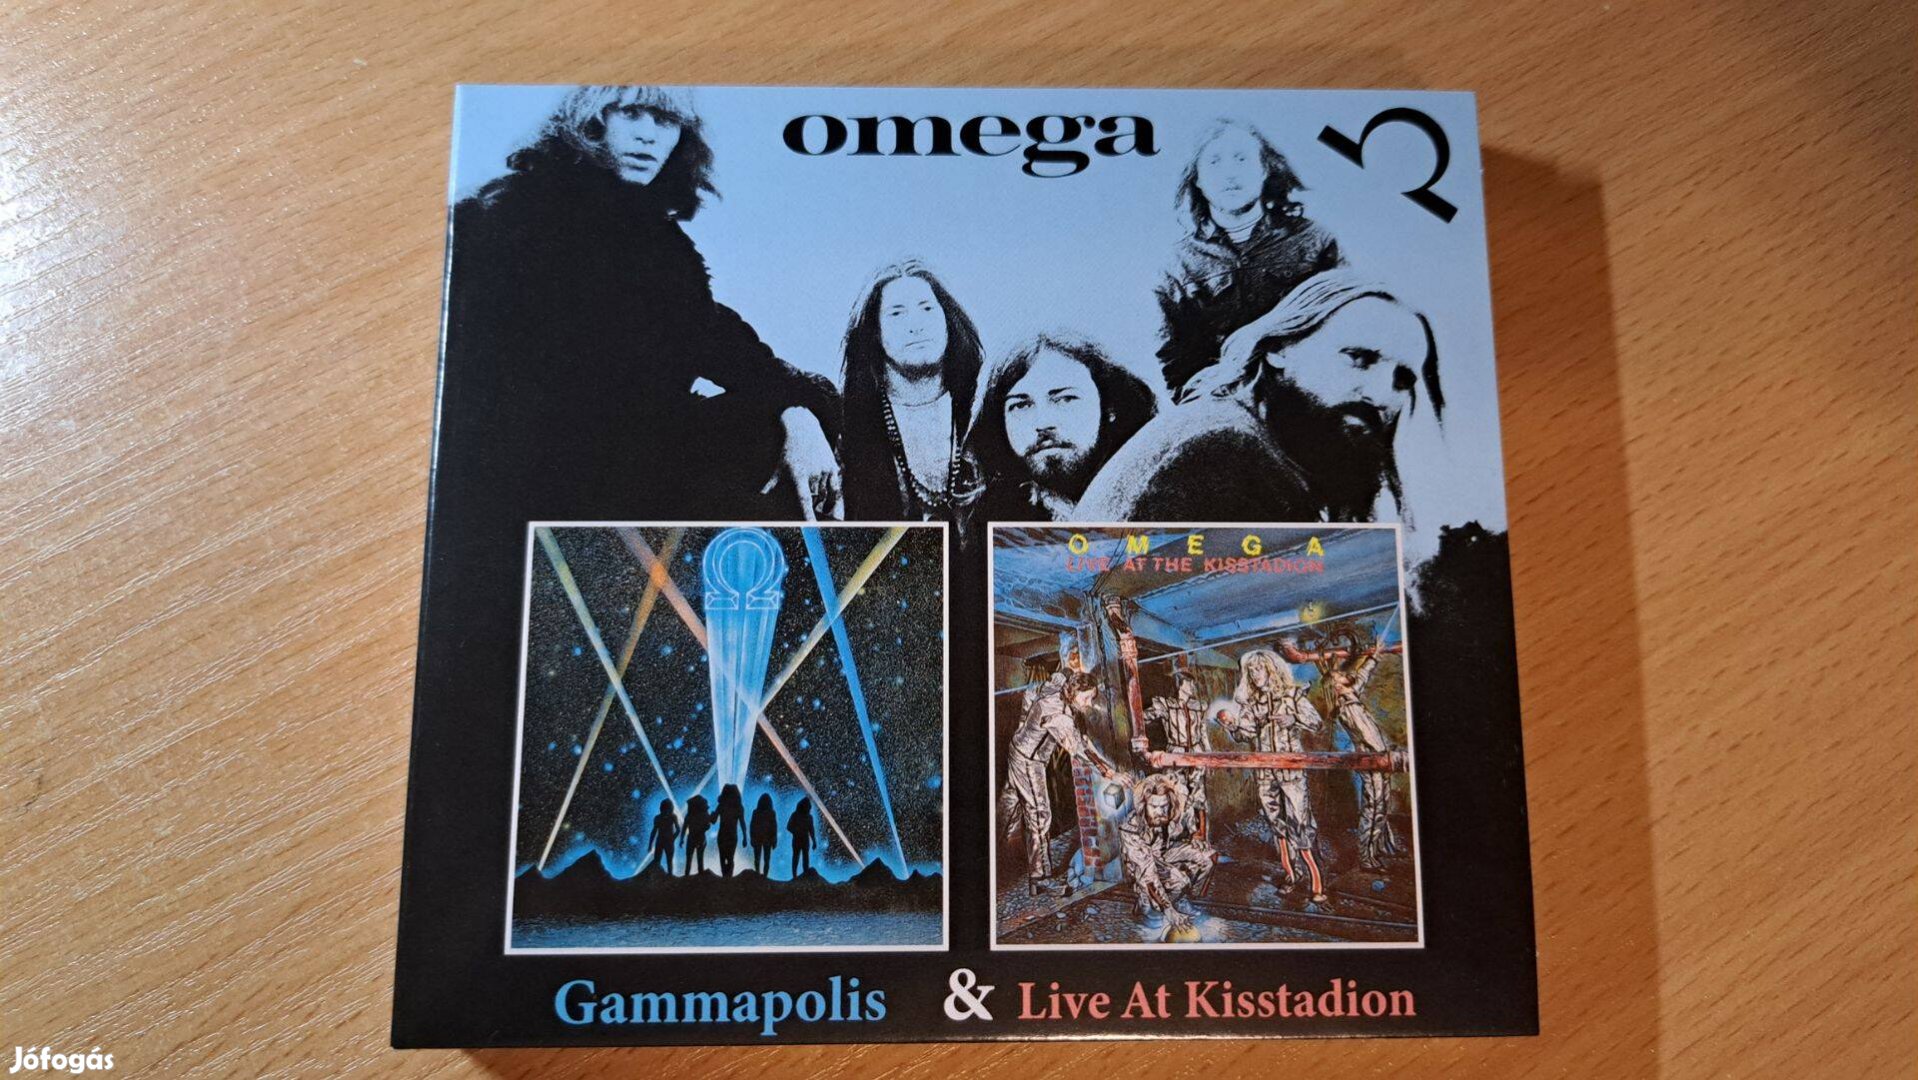 Omega - Gammapolis & Live at Kisstadion - dupla CD